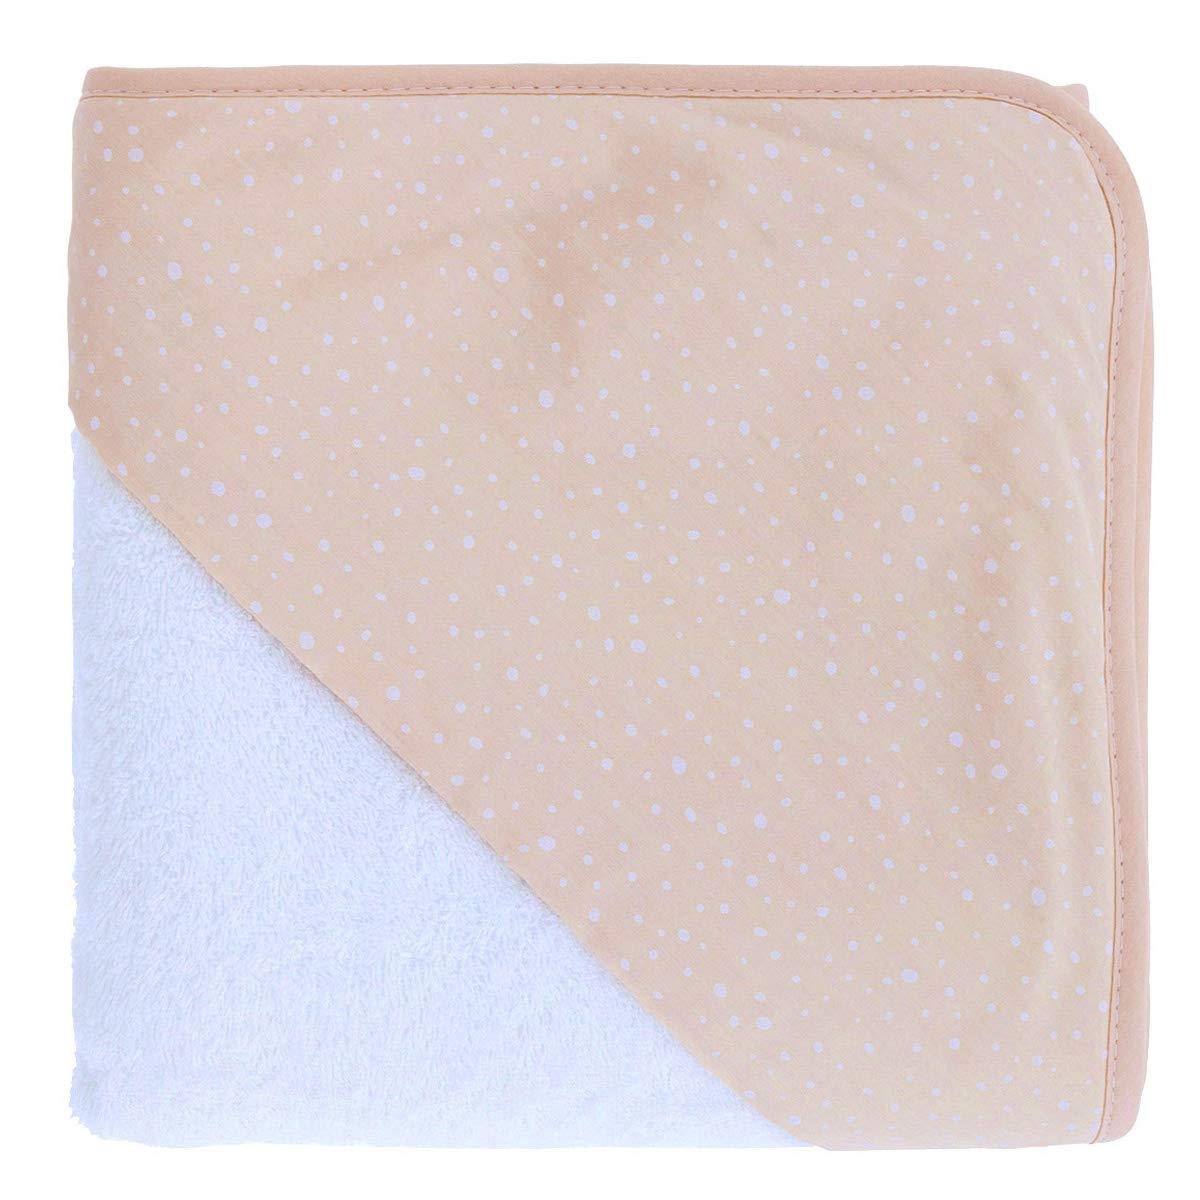 Be 45660 Towel Cap 100x100 cm Be Teckel Peach, orange 660 g